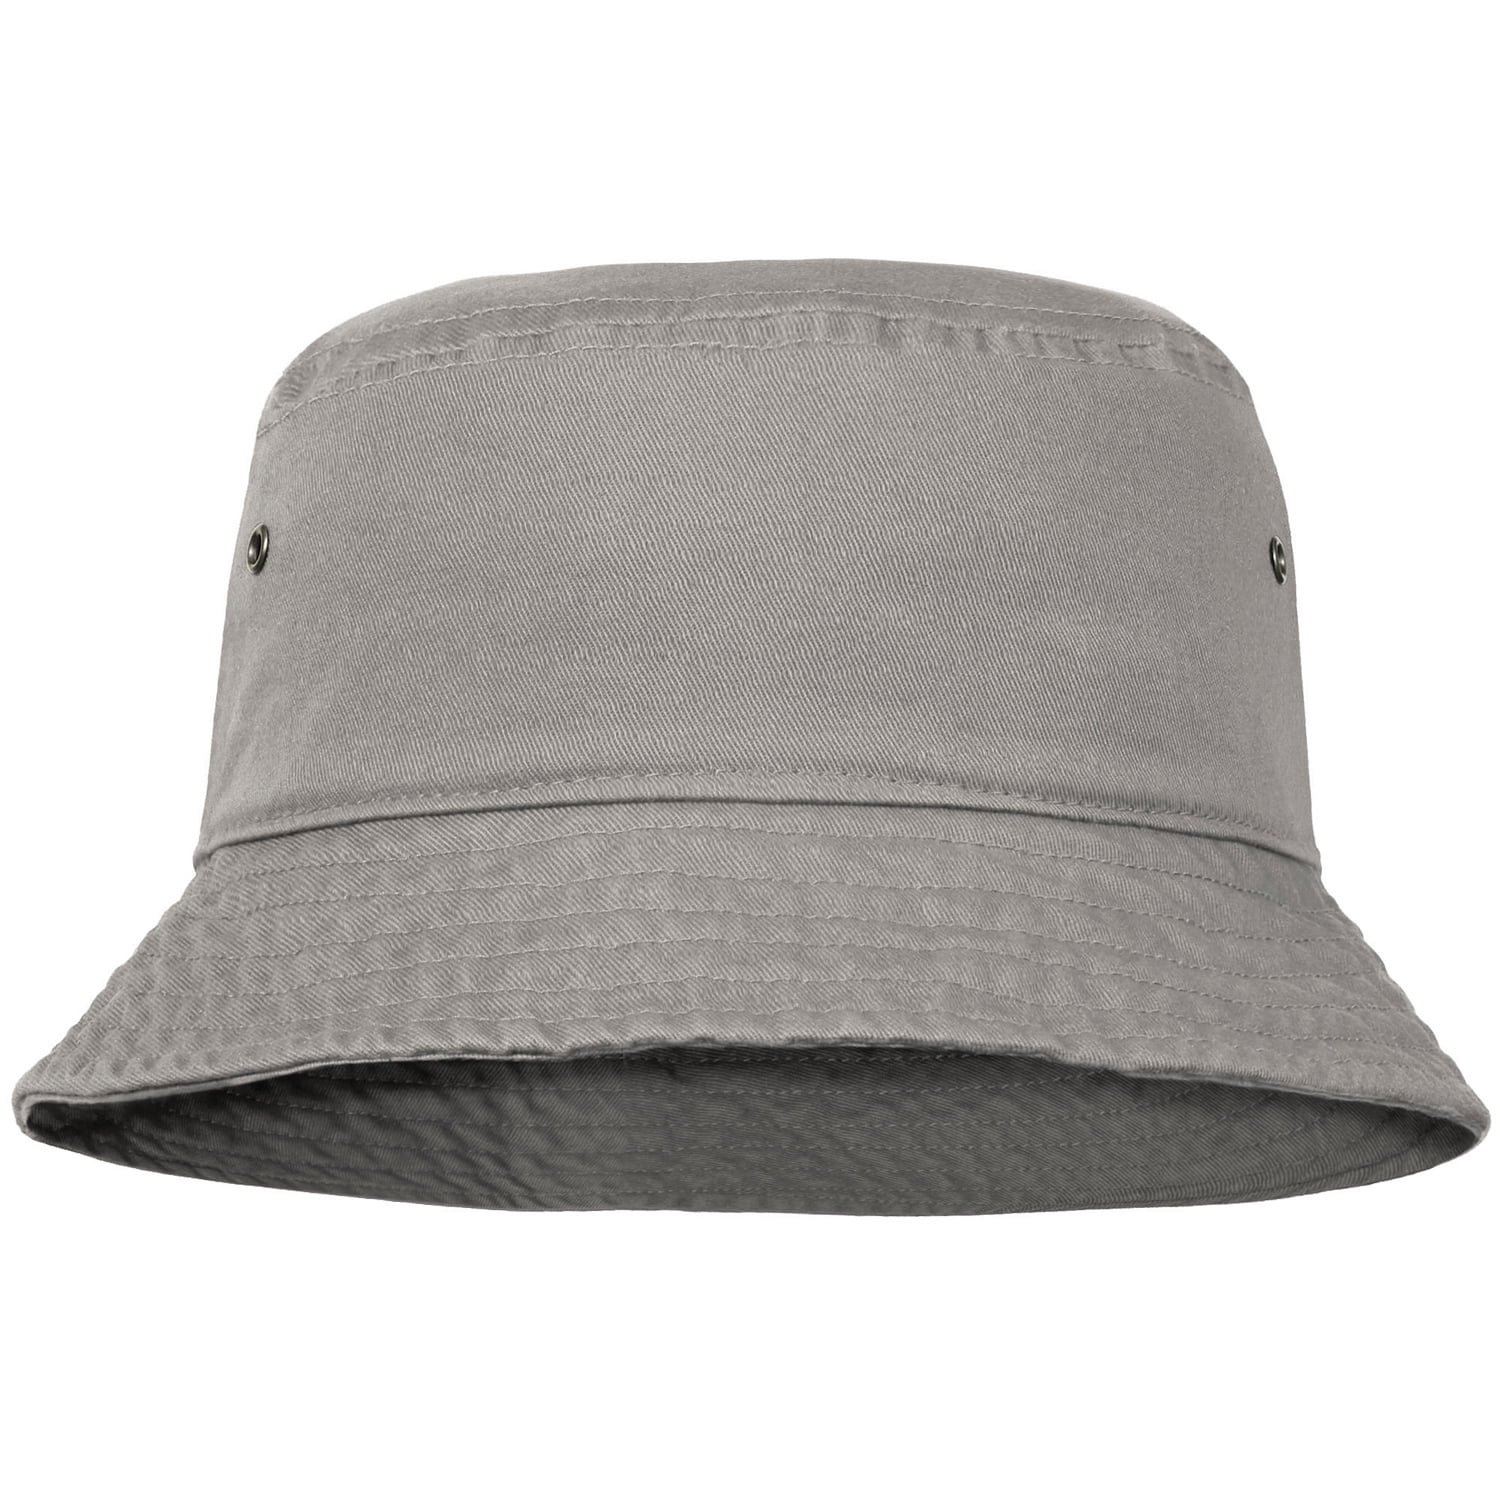 Women for Travel Outdoor - Hat Summer Unisex Hat Foldable Packable Beach Bucket Cotton 100% Grey Men SM Fishing